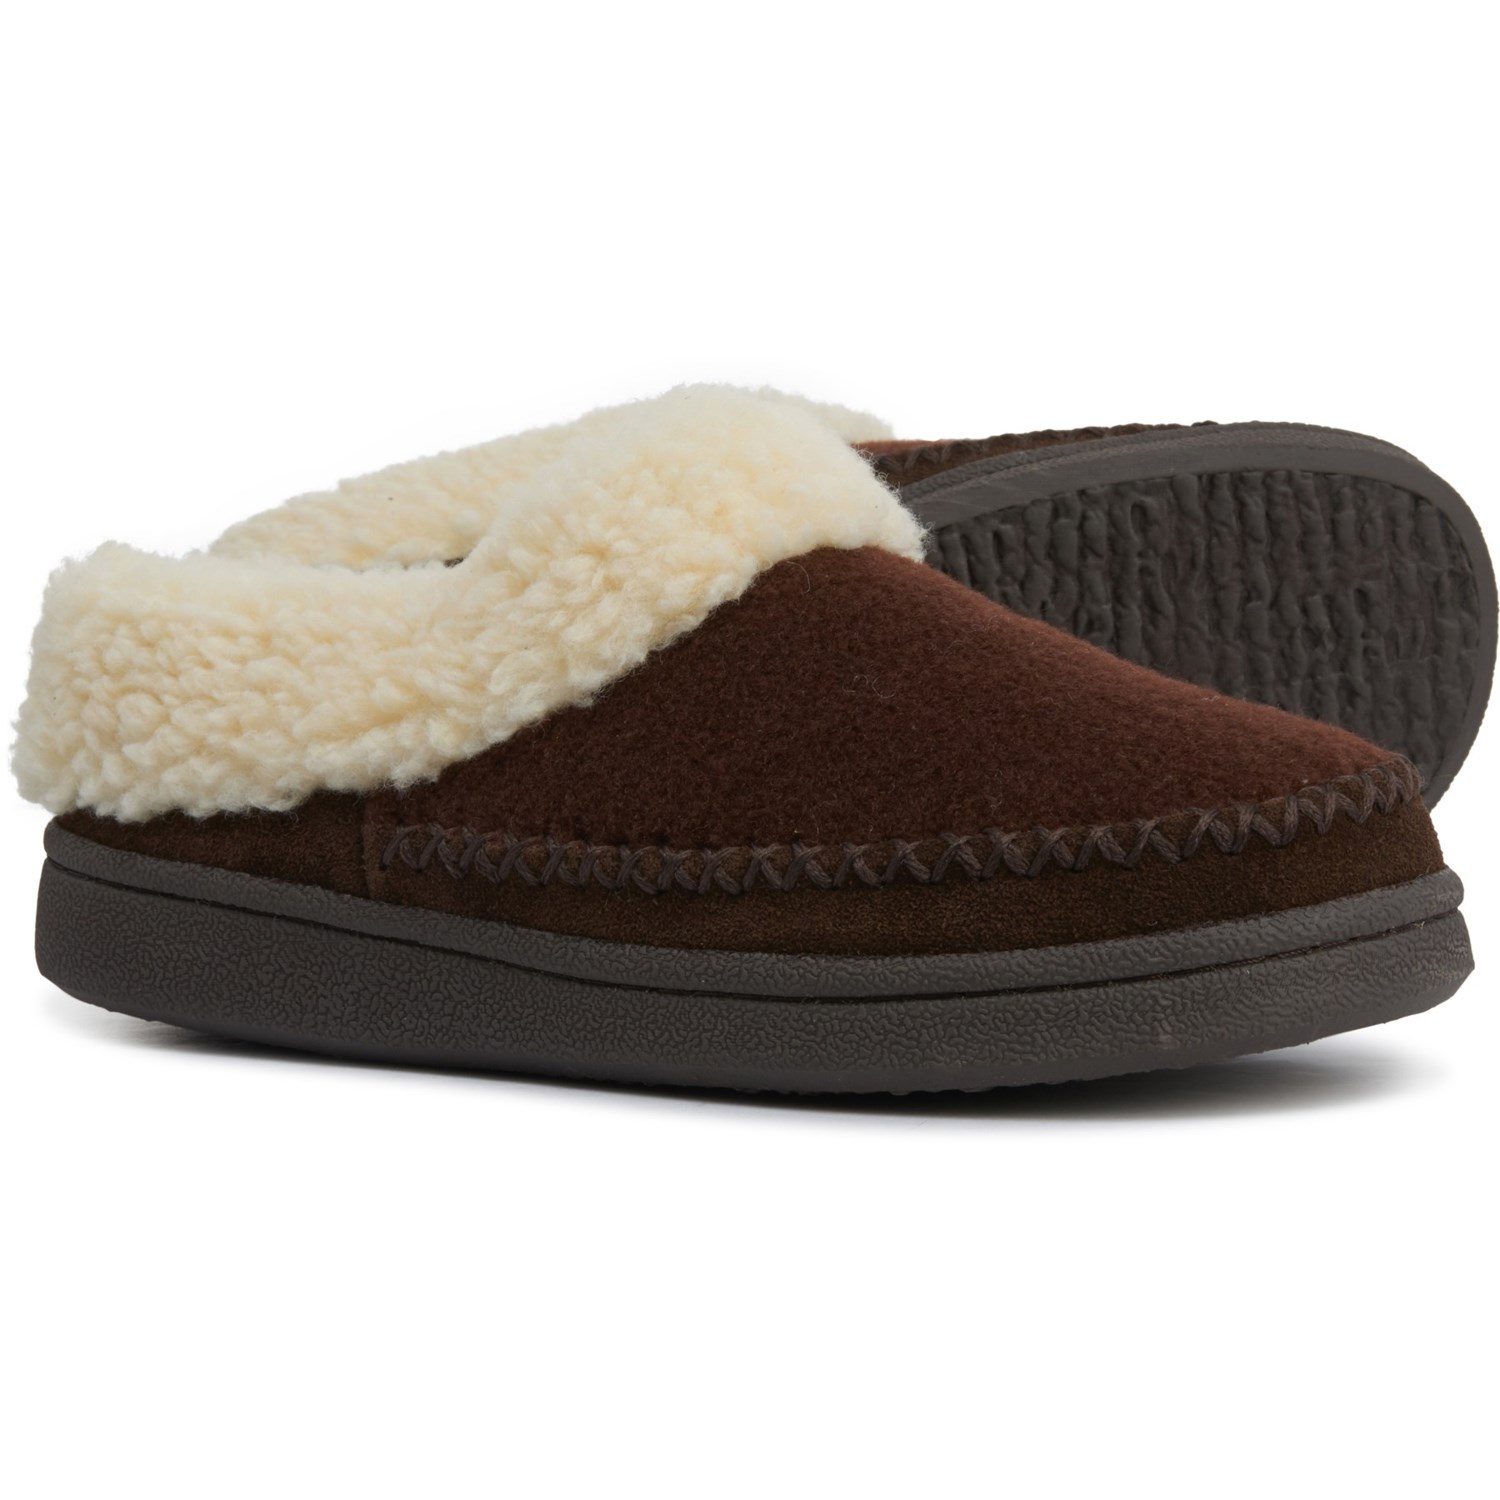 sherpa slippers womens